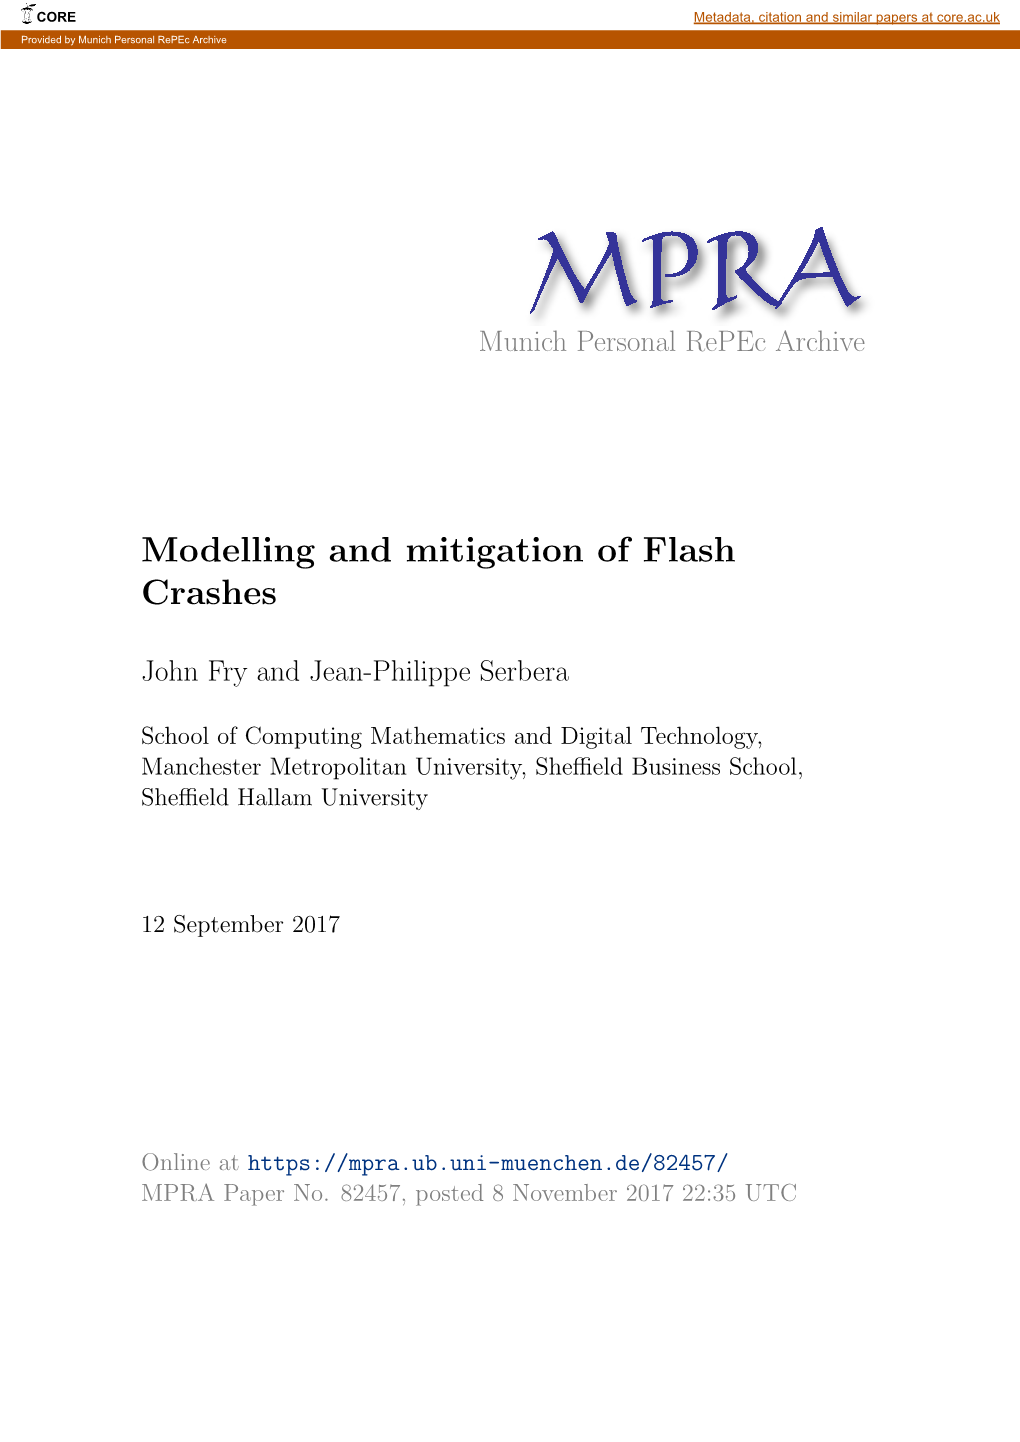 Modelling and Mitigation of Flash Crashes